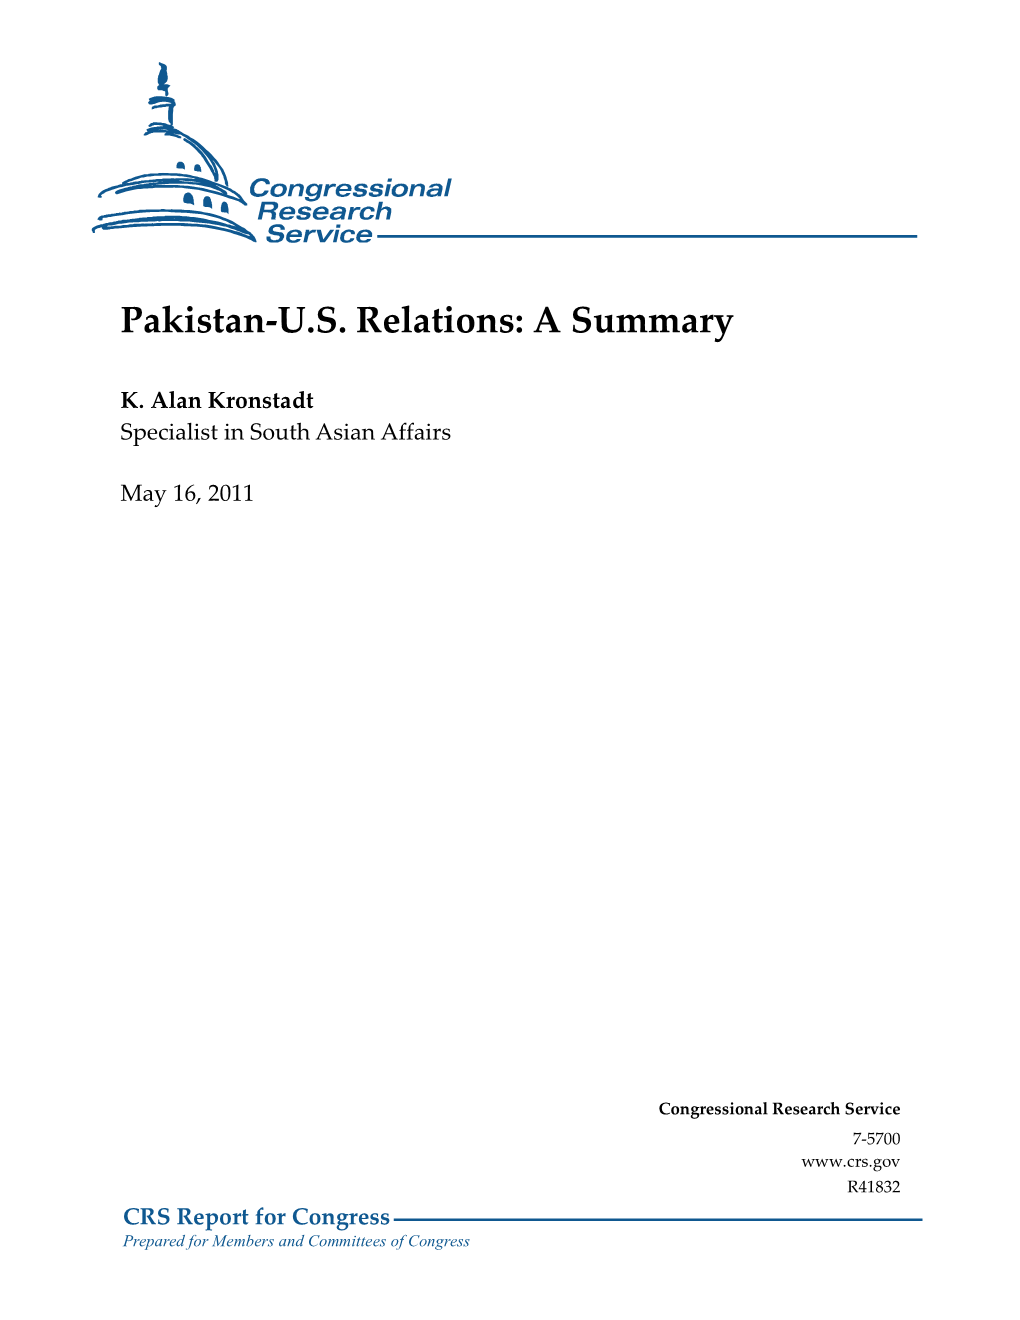 Pakistan-US Relations